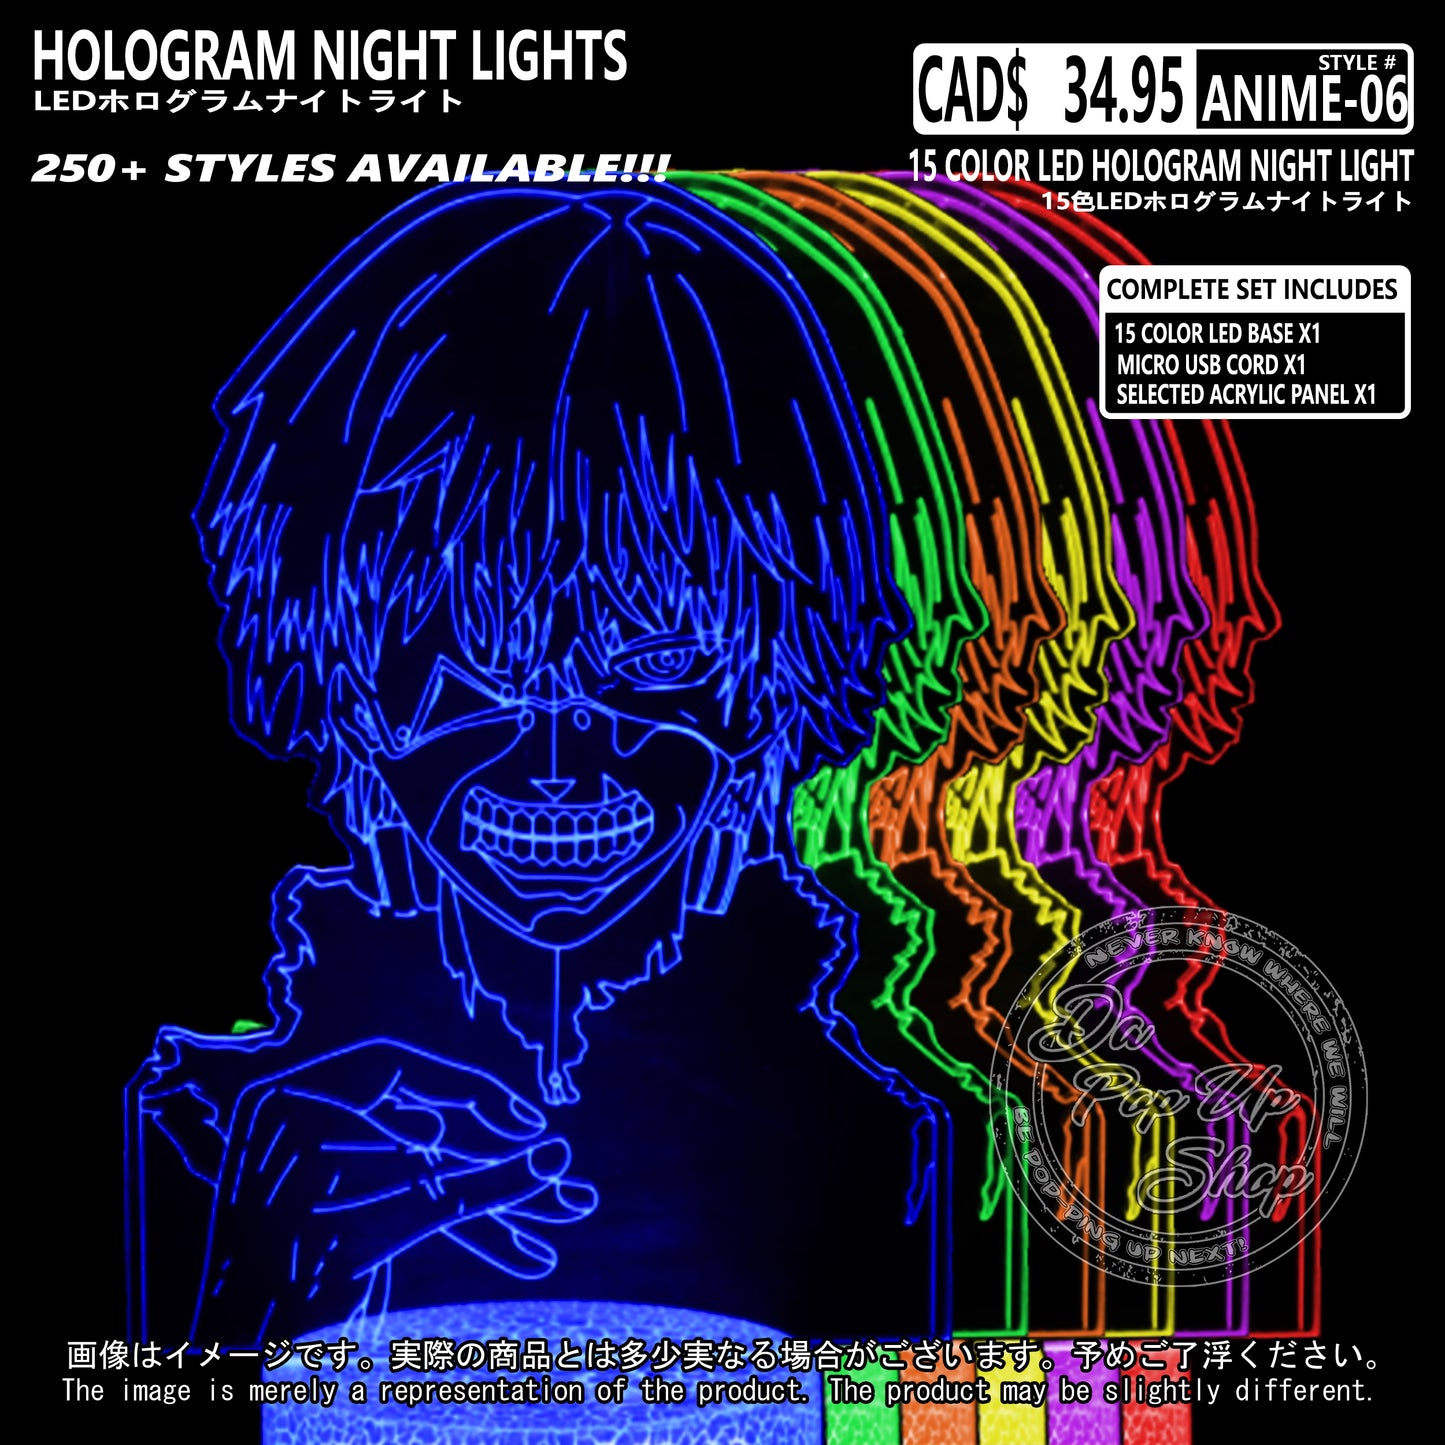 (ANIME-06) Tokyo Ghoul Hologram LED Night Light